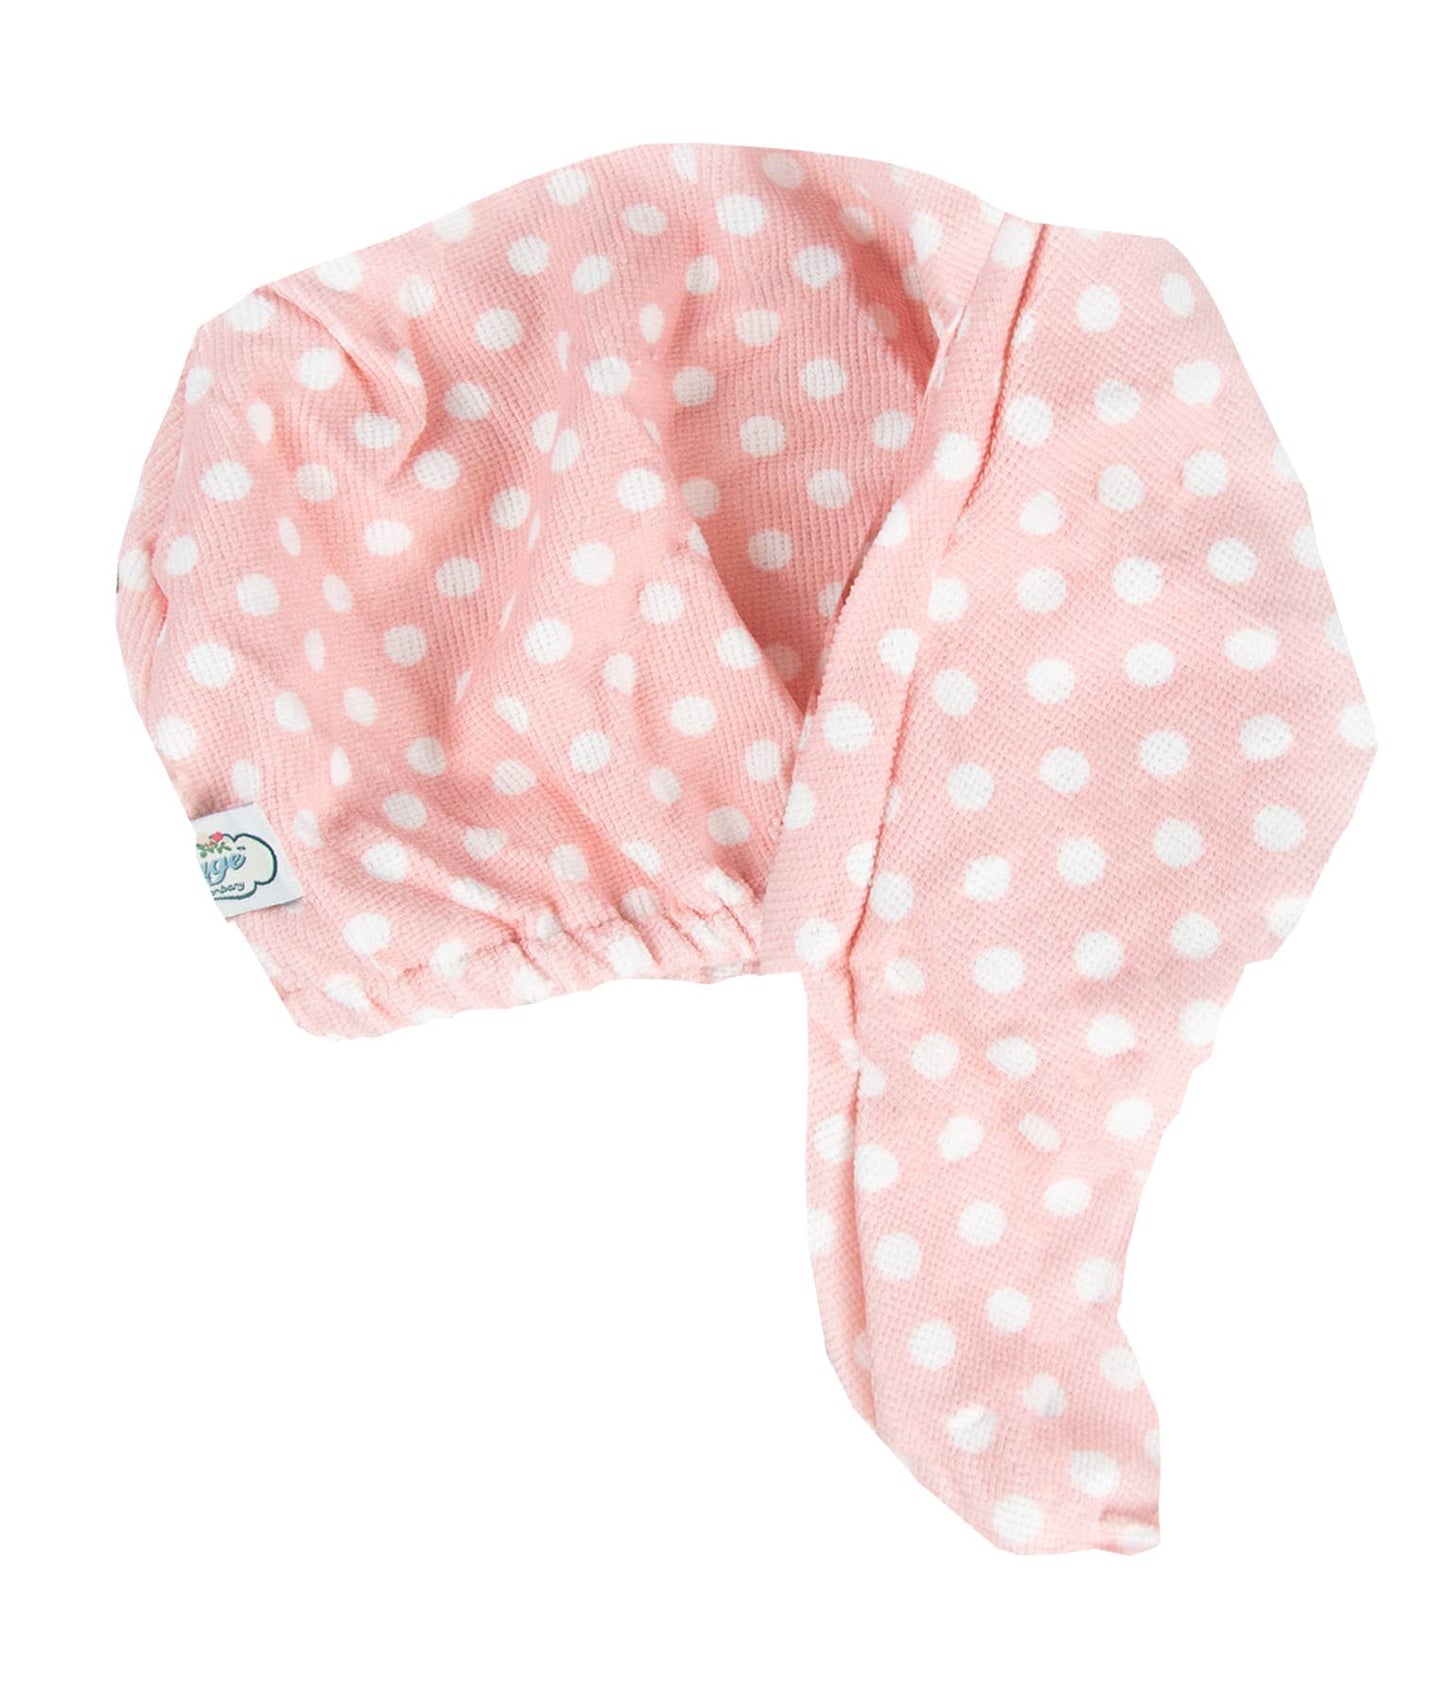 Absorbent Microfibre Hair Towel / Wrap in Pink Polka Dot